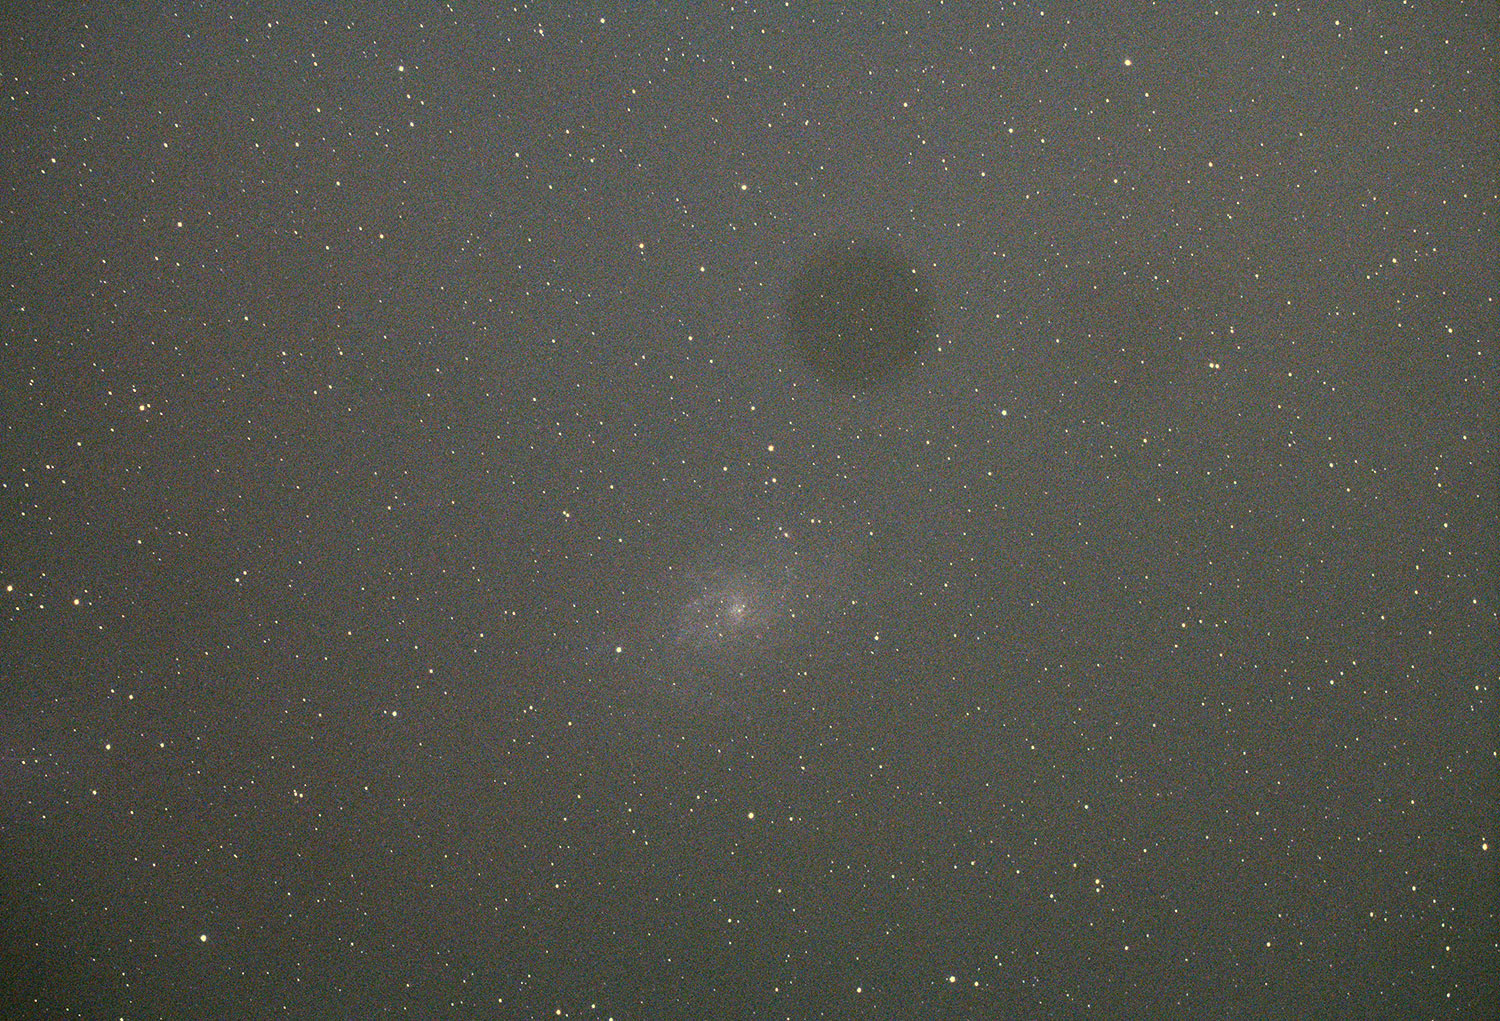 M33 single 90 second exposure after debayer in Fitswork